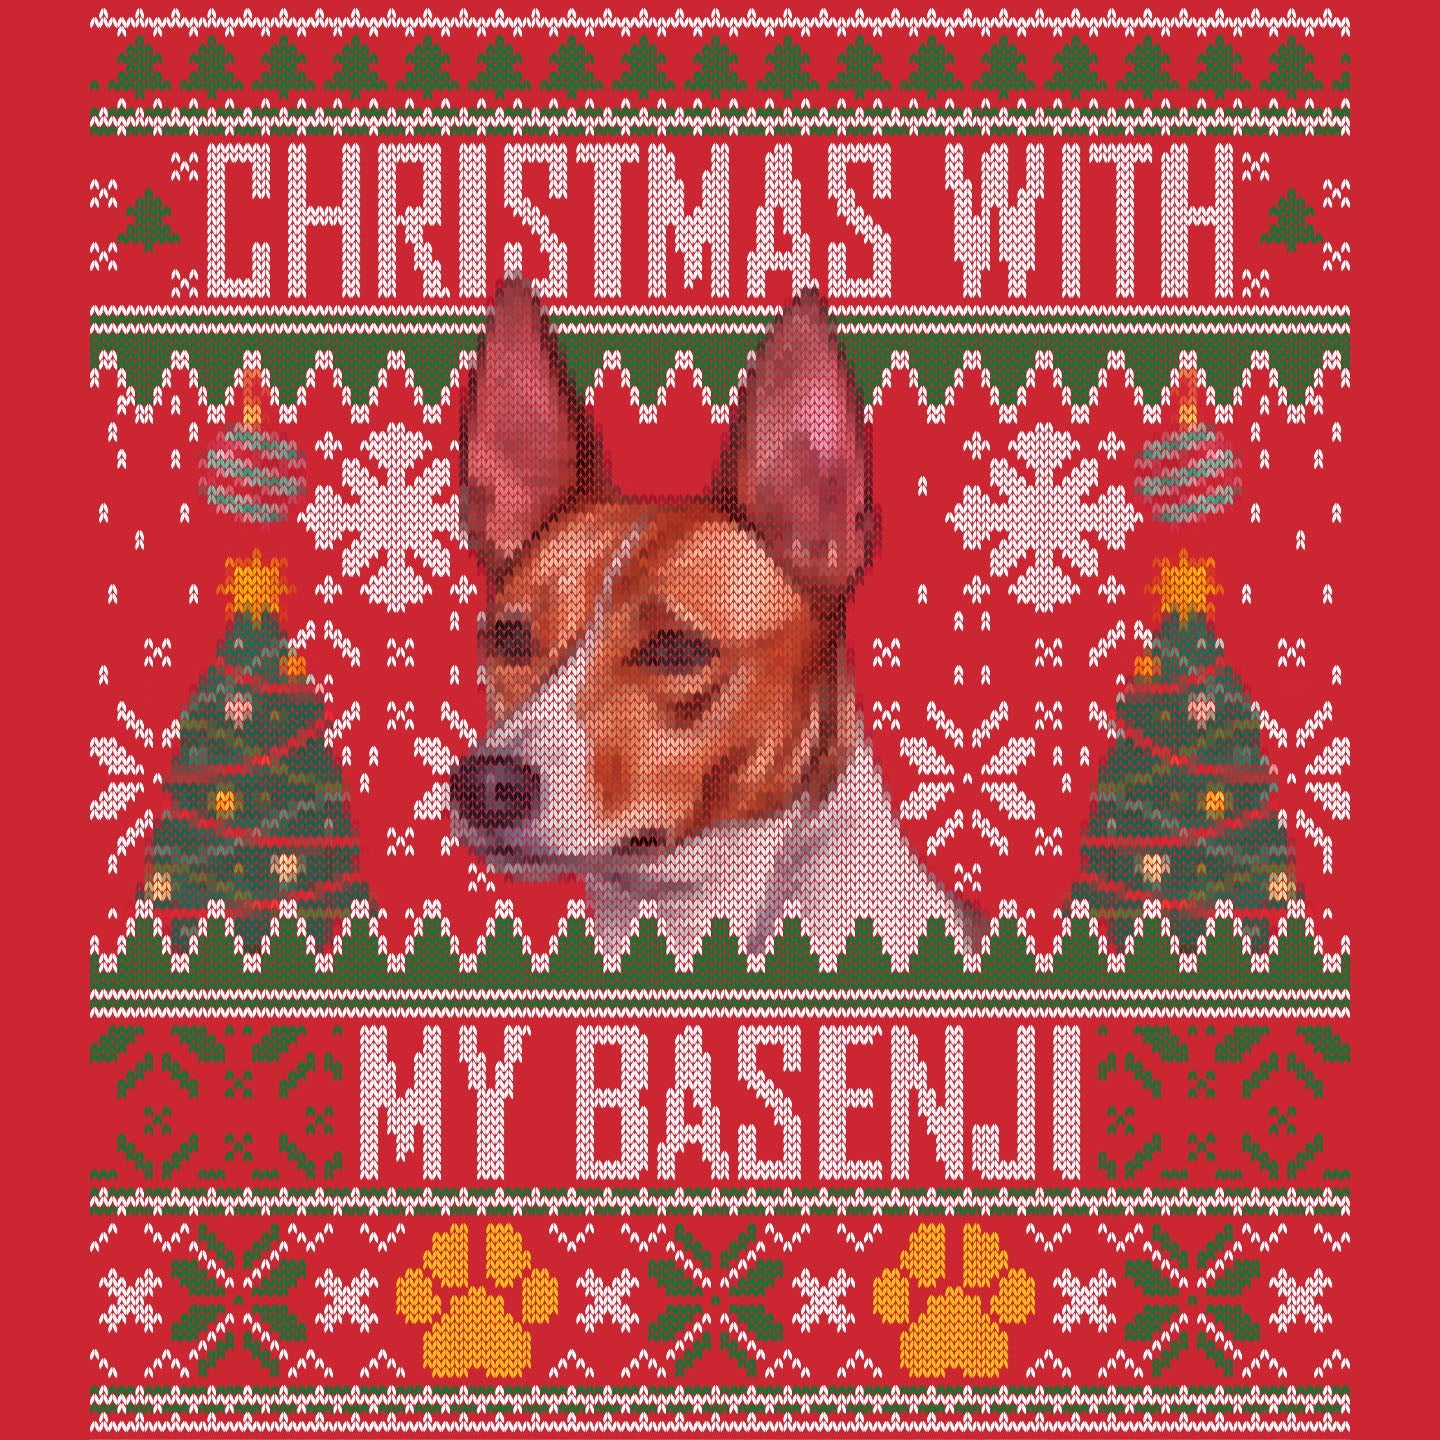 Ugly Sweater Christmas with My Basenji - Adult Unisex Long Sleeve T-Shirt